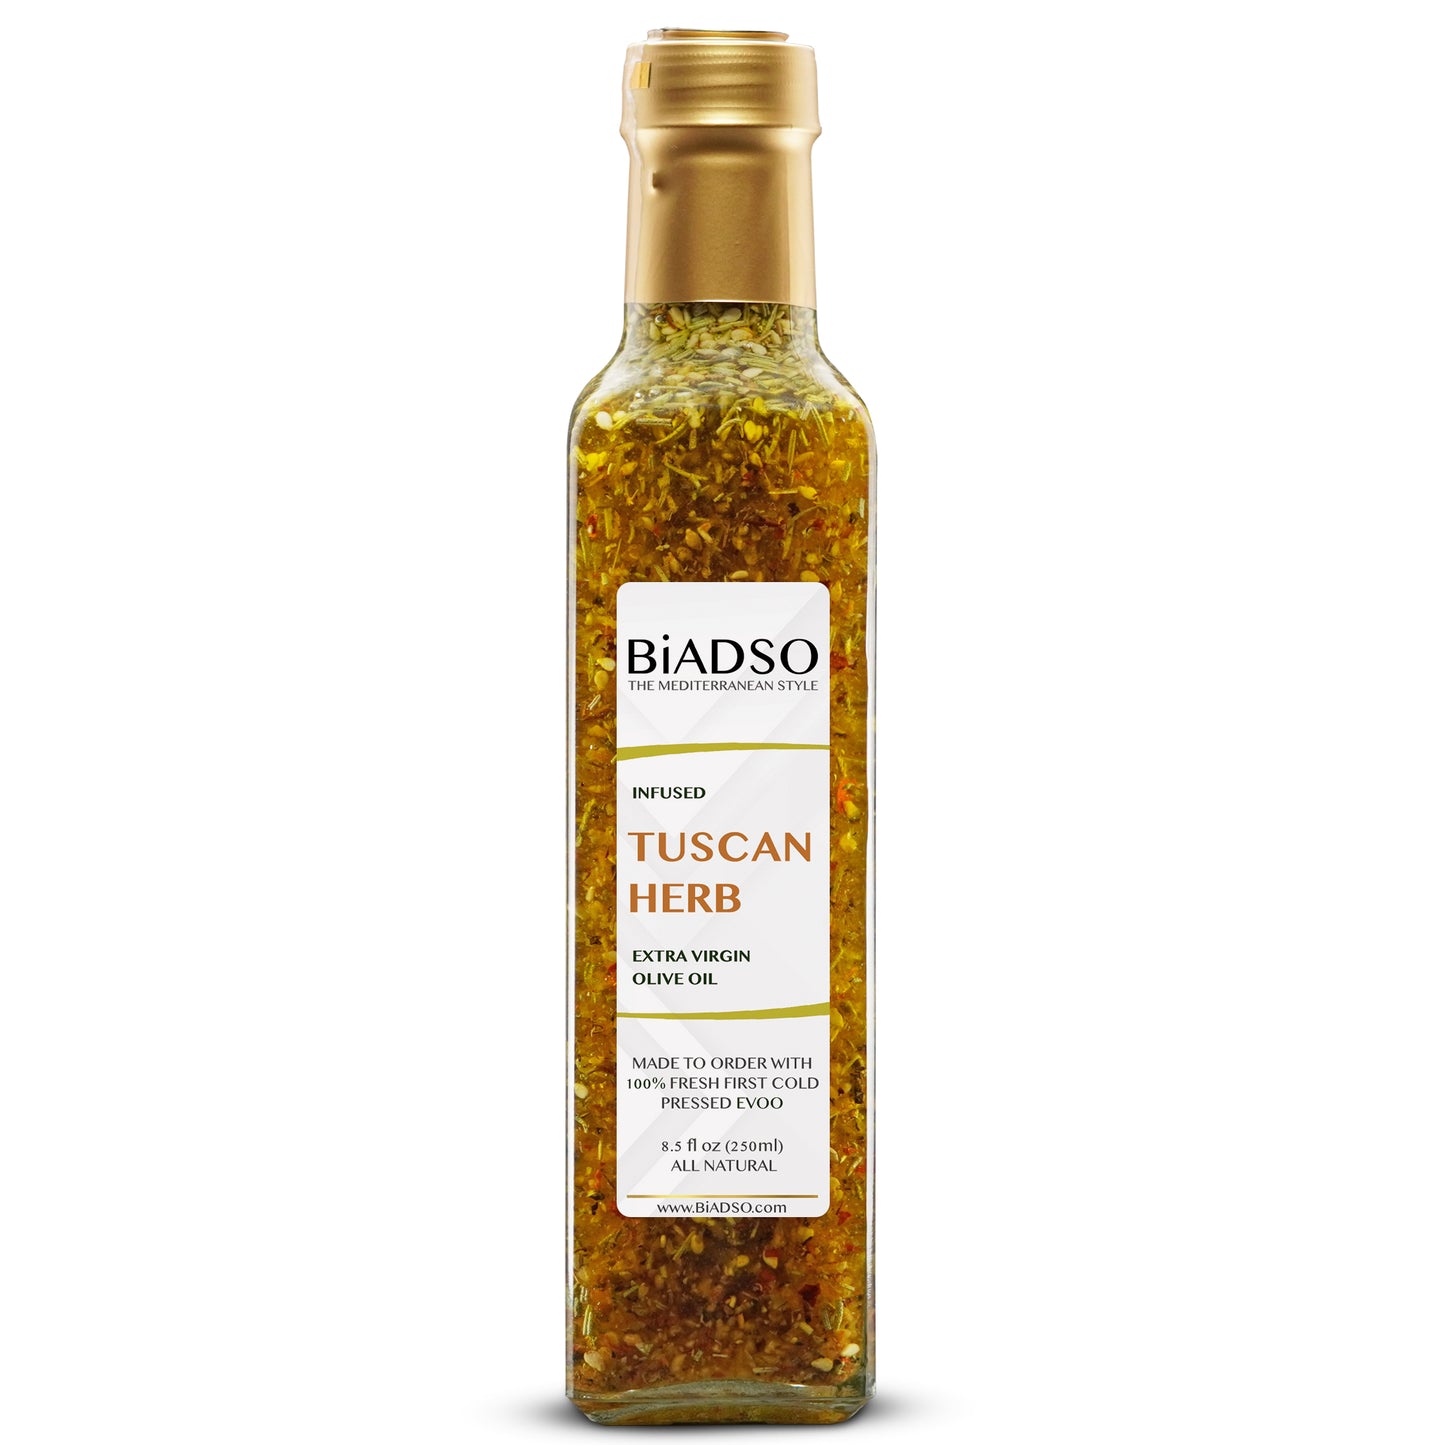 Tuscan Herb Infused Olive Oil Biadso Mediterranean Oil and Vinegar